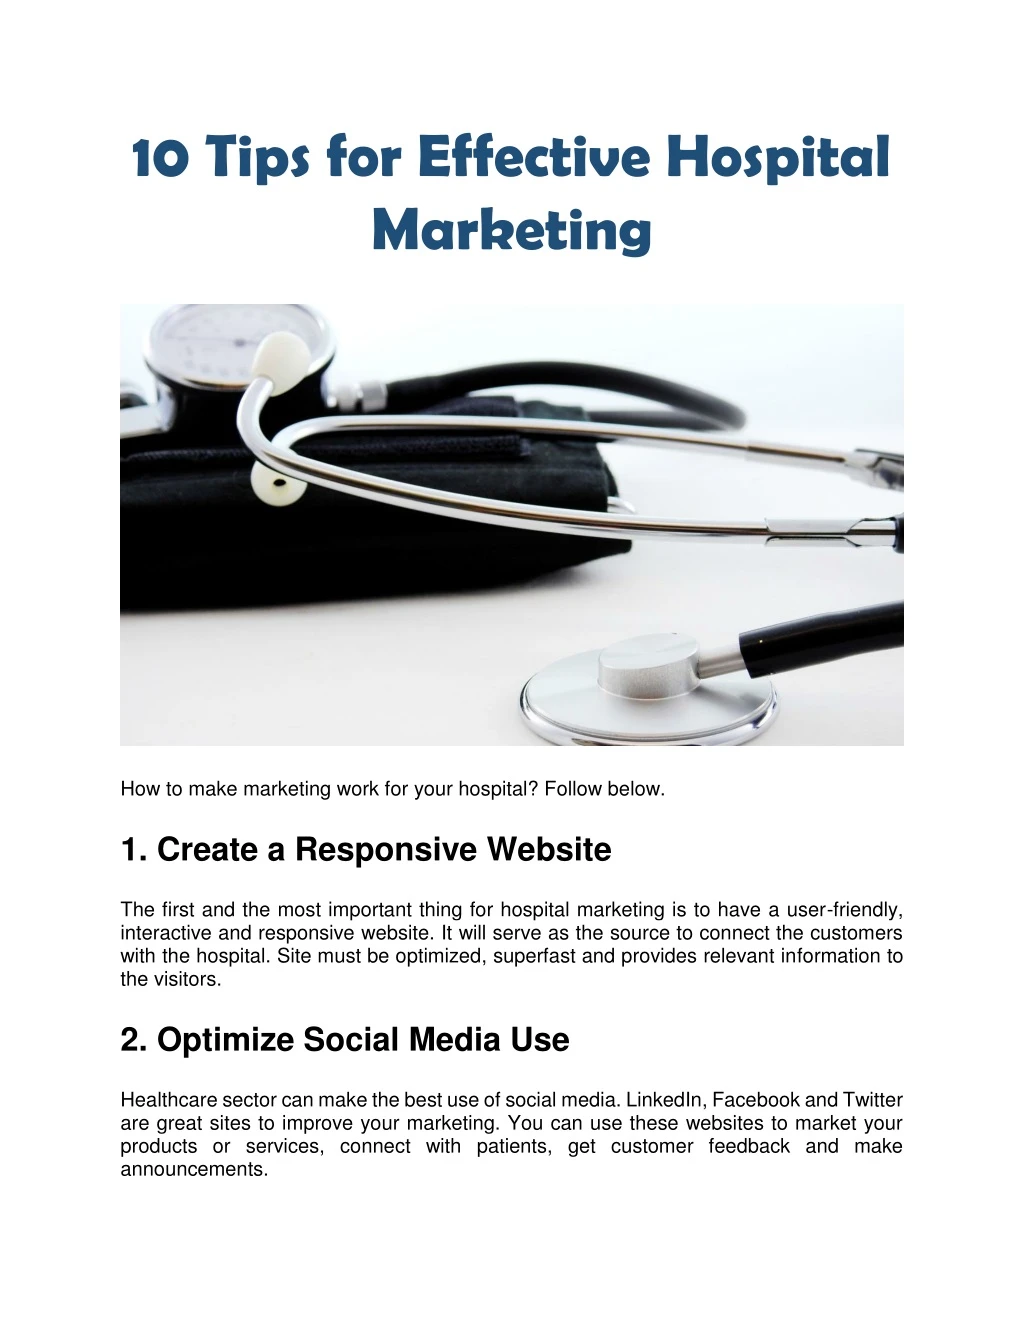 10 tips for effective hospital marketing